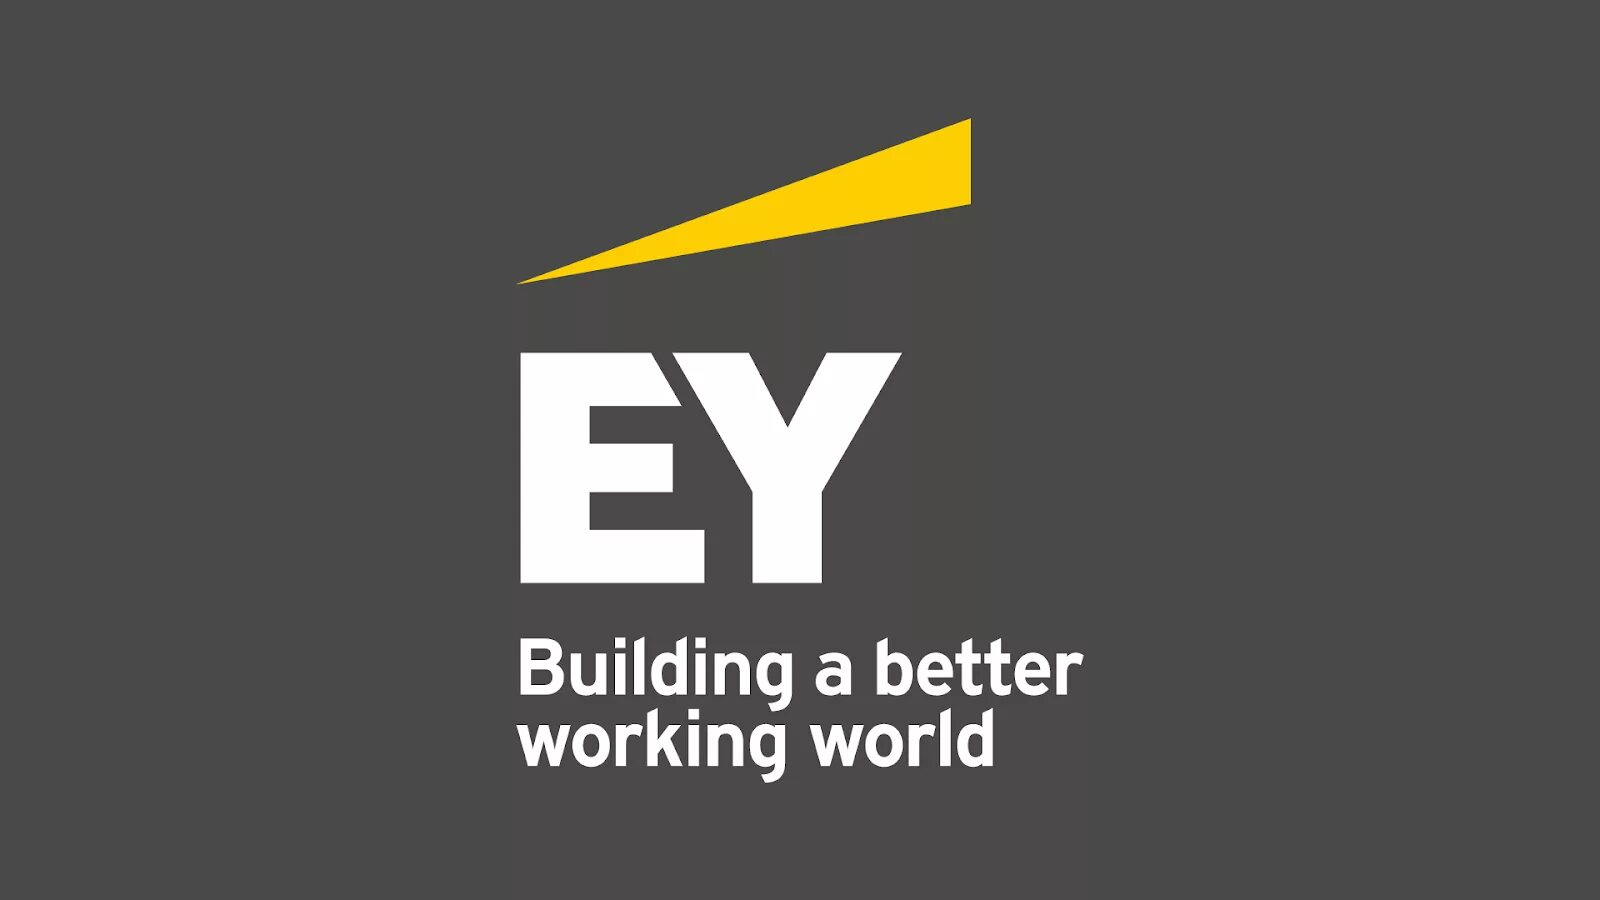 Ey логотип. Ernst and young лого. Ey логотип без фона. Академия бизнеса "Ernst & young".